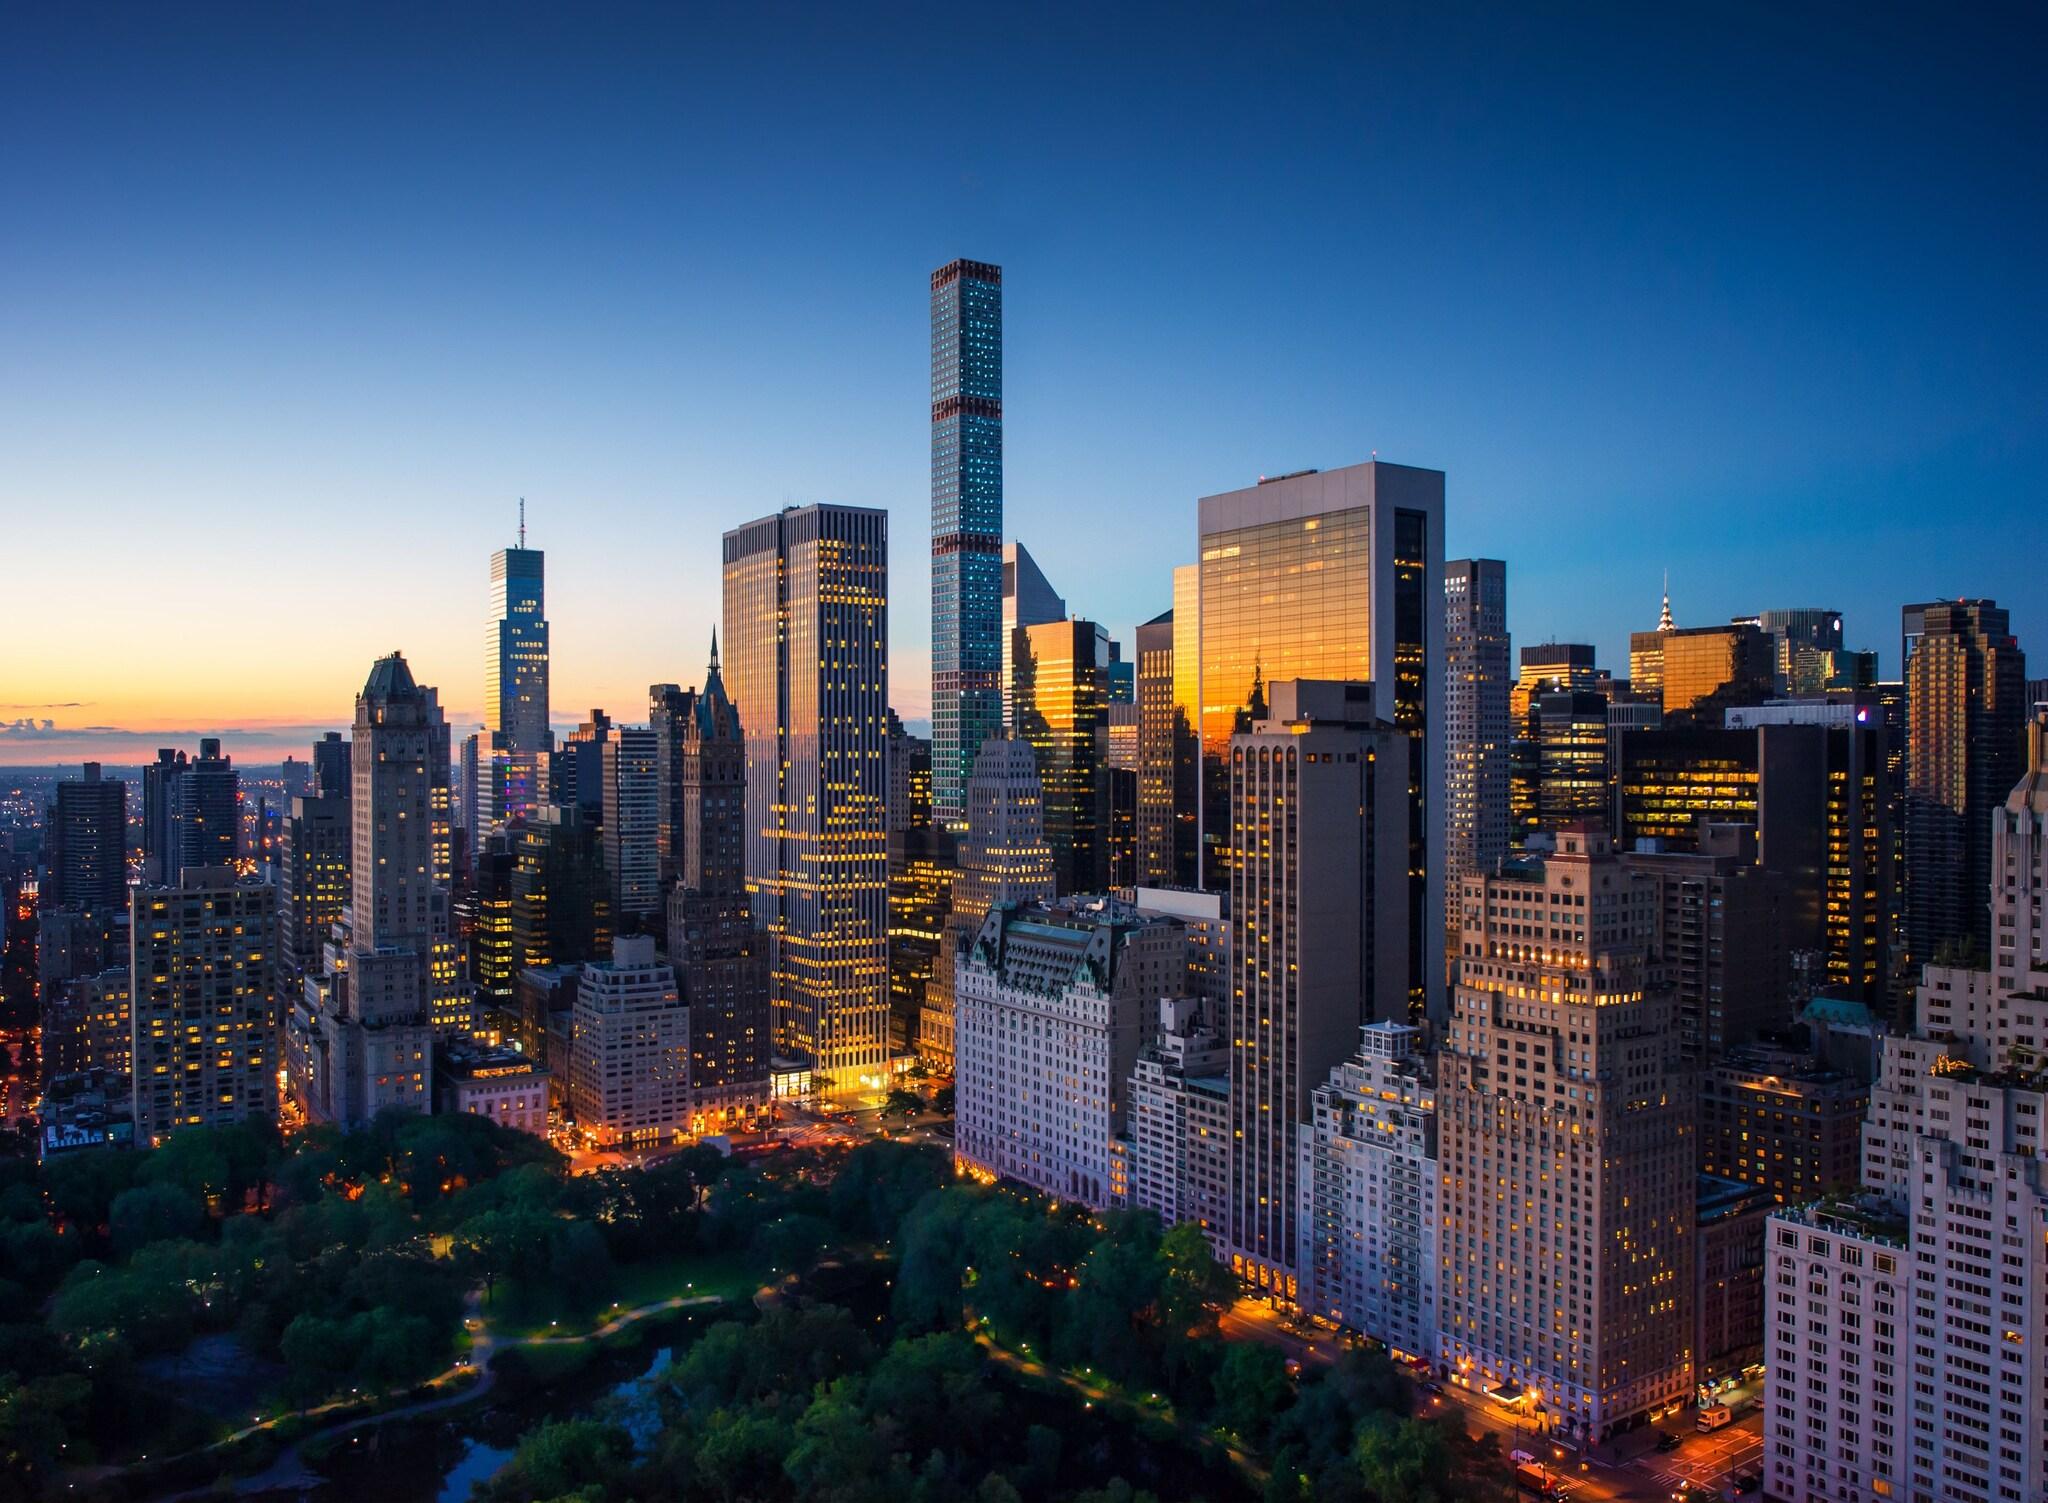 The Ritz-Carlton New York, Central Park image